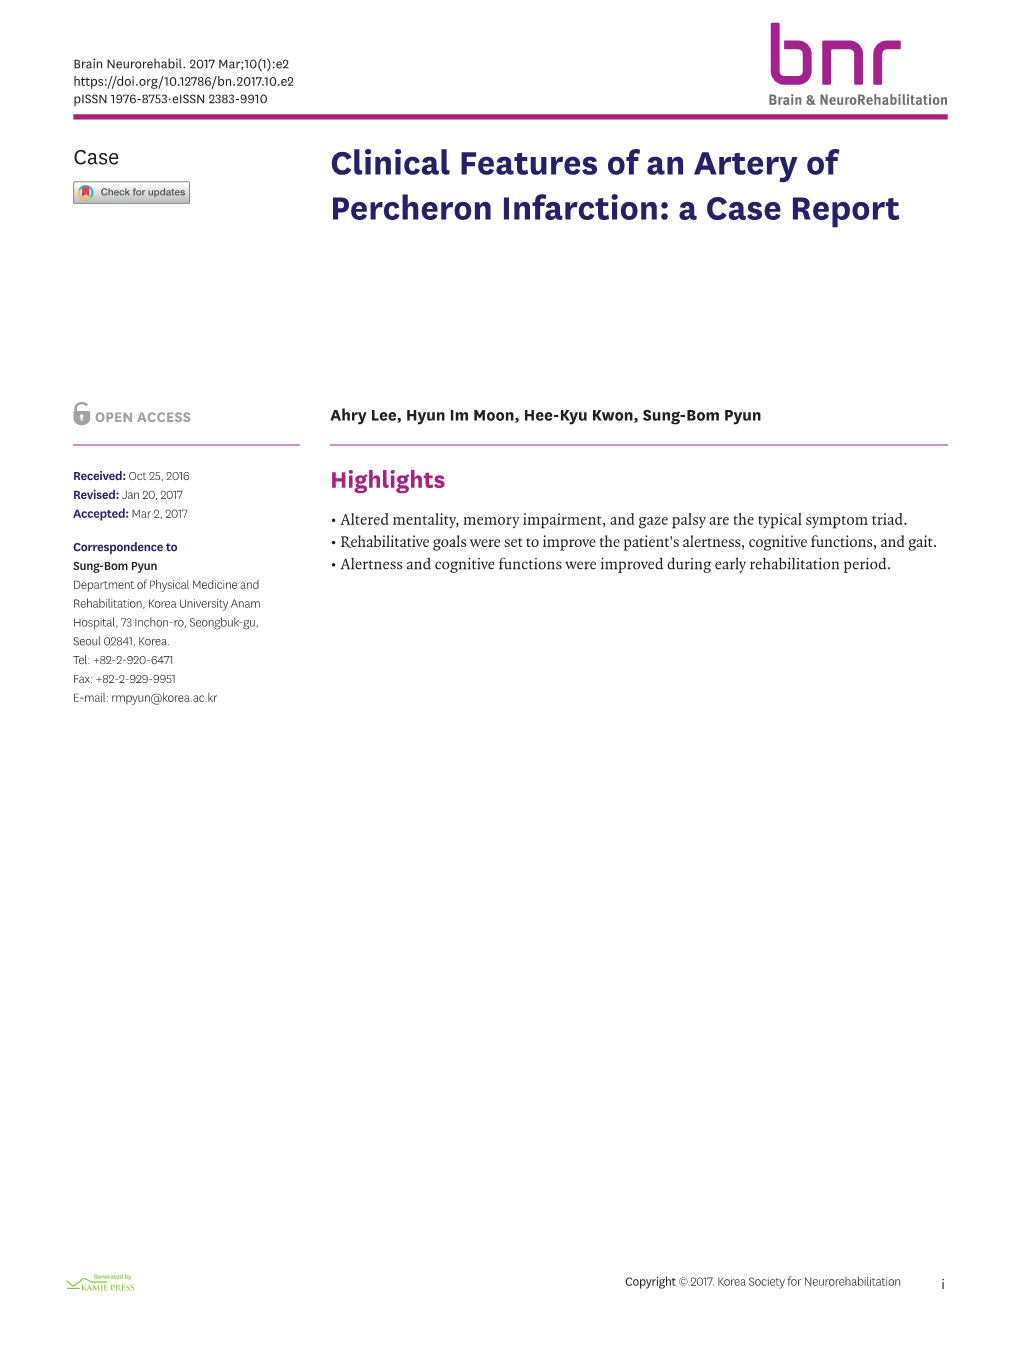 Clinical Features of an Artery of Percheron Infarction: a Case Report